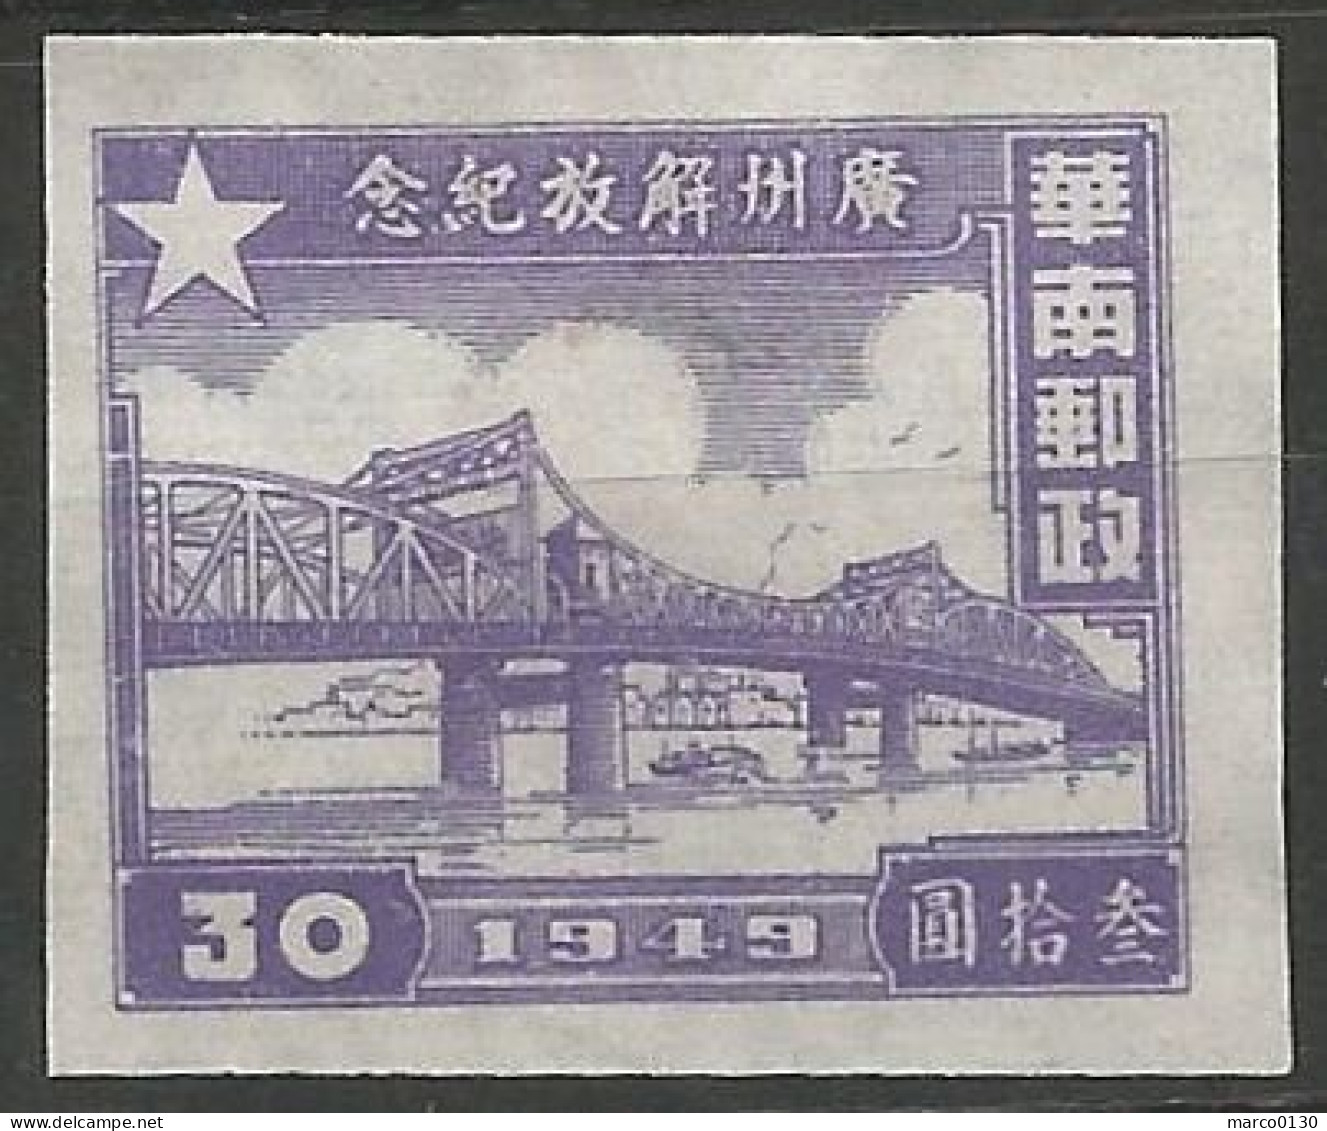 CHINE / CHINE DU SUD N° 1 + N° 2 + N° 3 + N° 4 + N° 5 NEUF Sans Gomme - Southern-China 1949-50